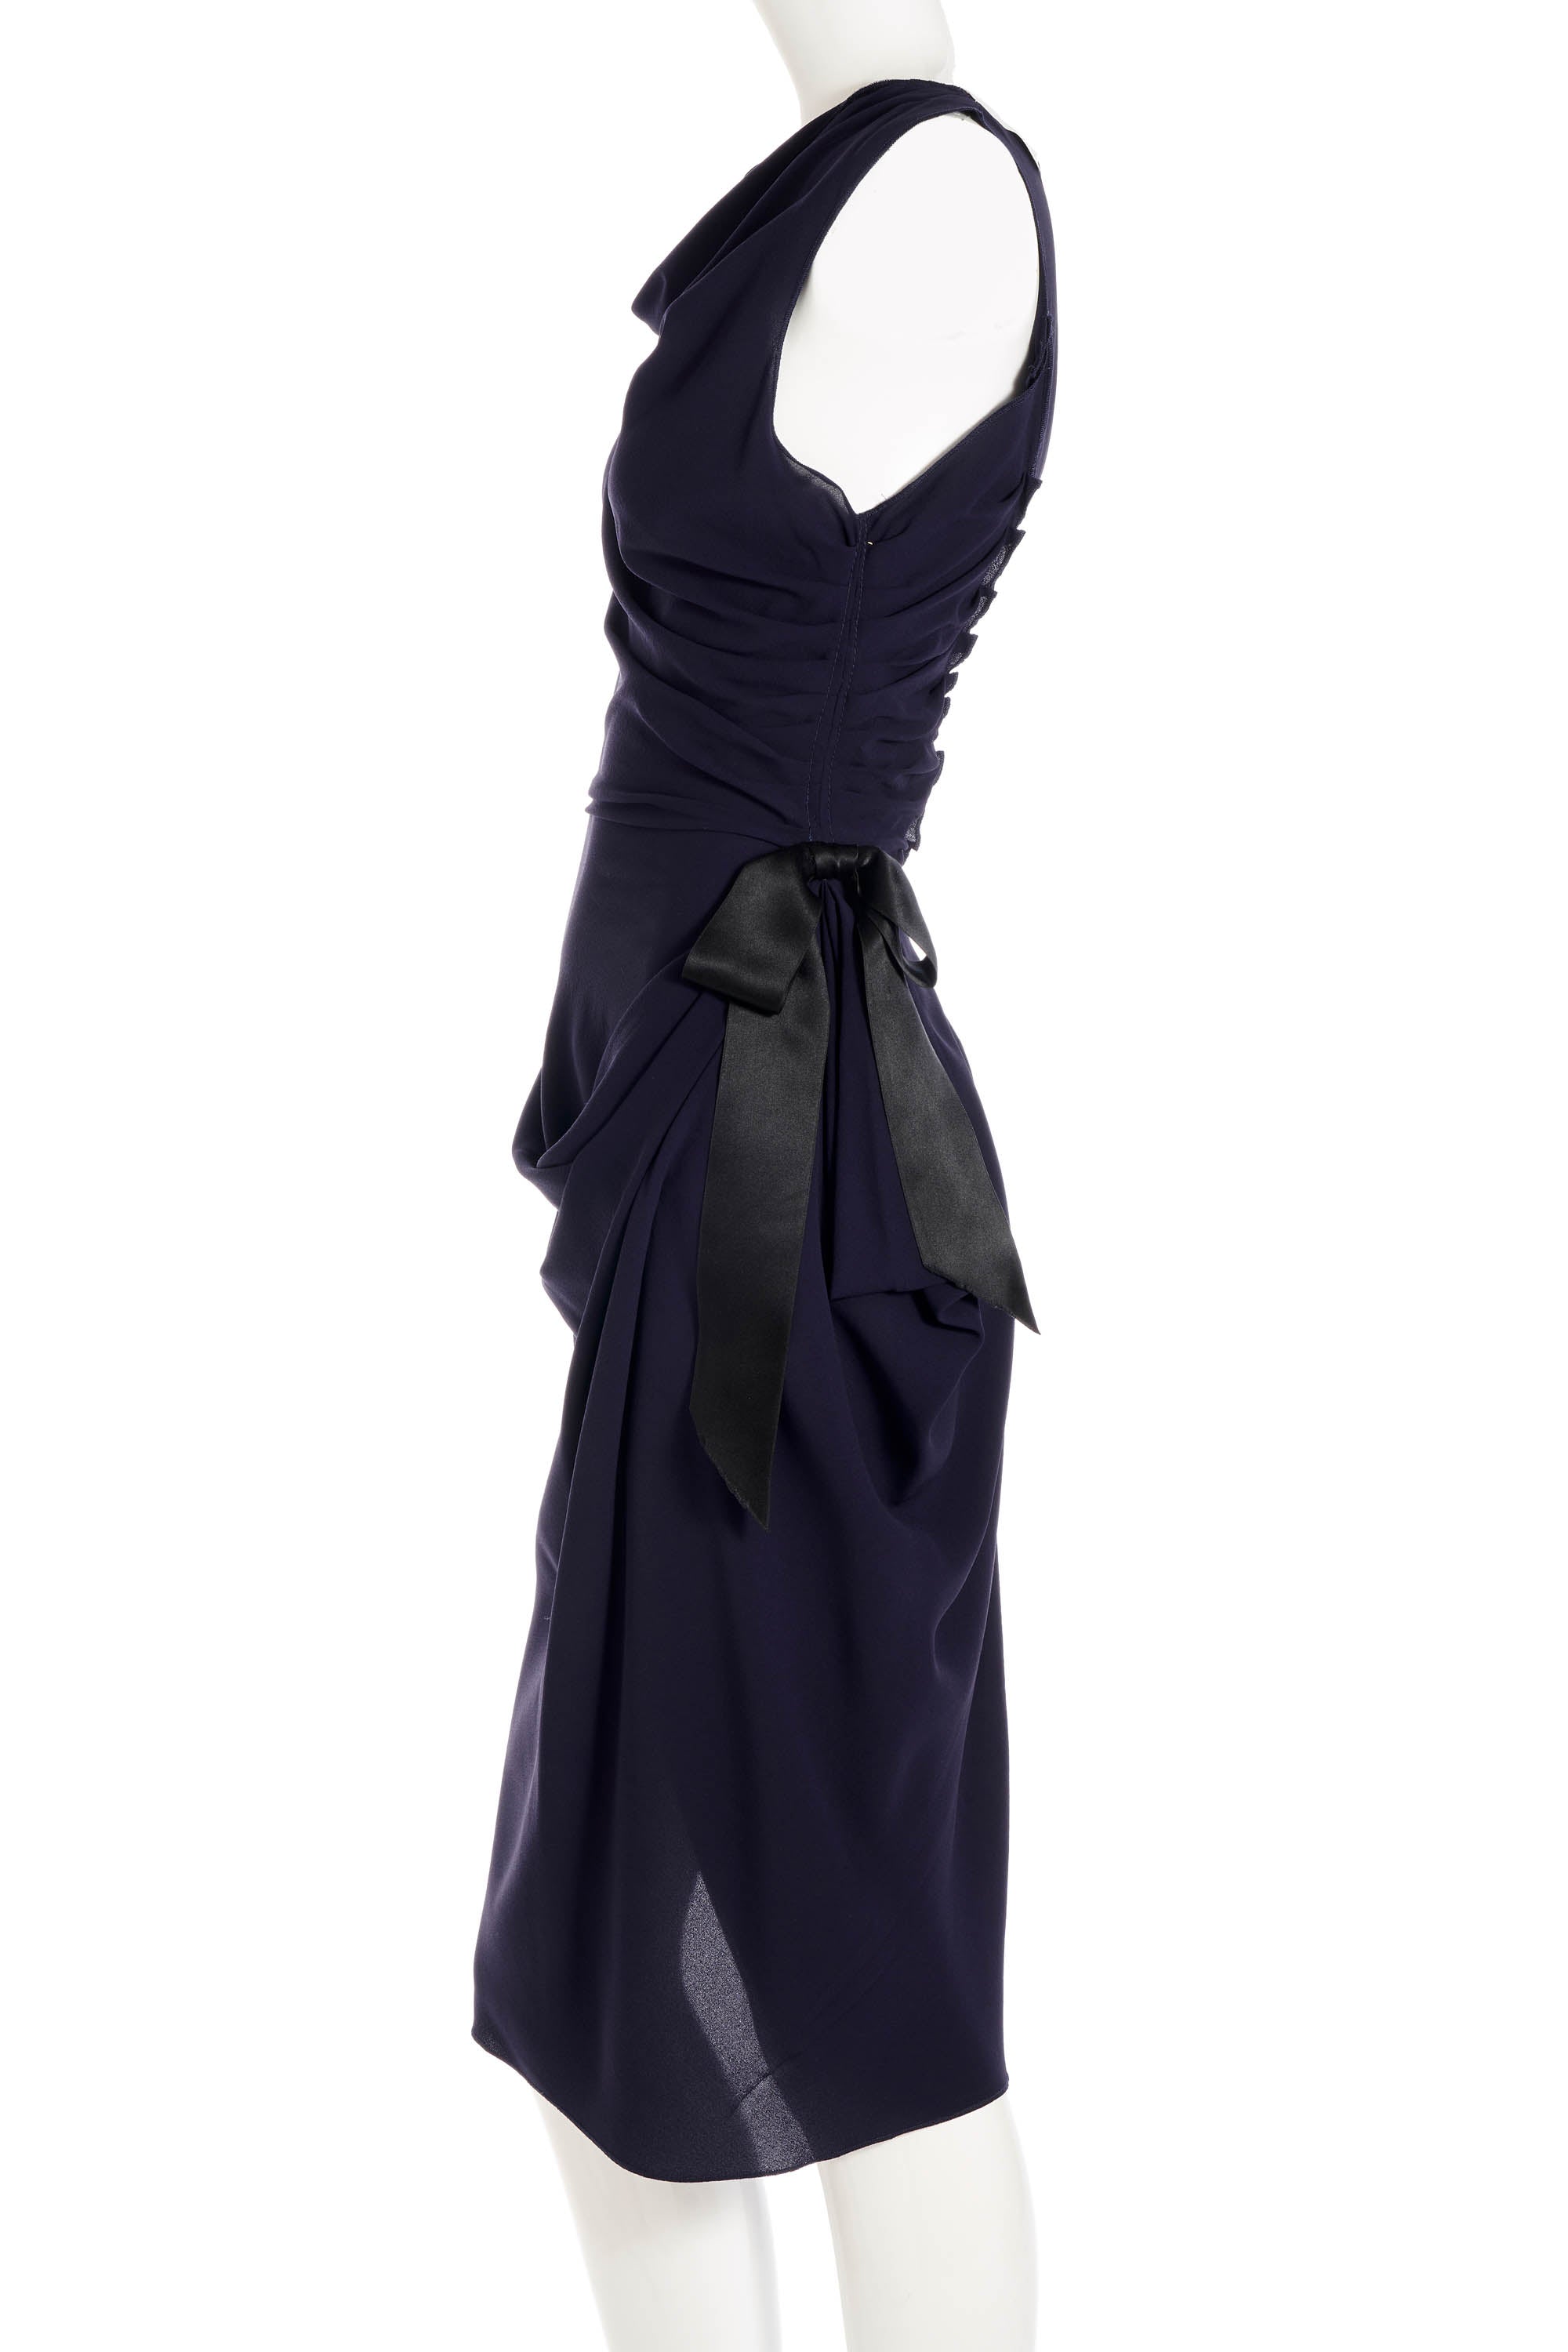 Nina Ricci Navy and Black Silk Dress Size 38